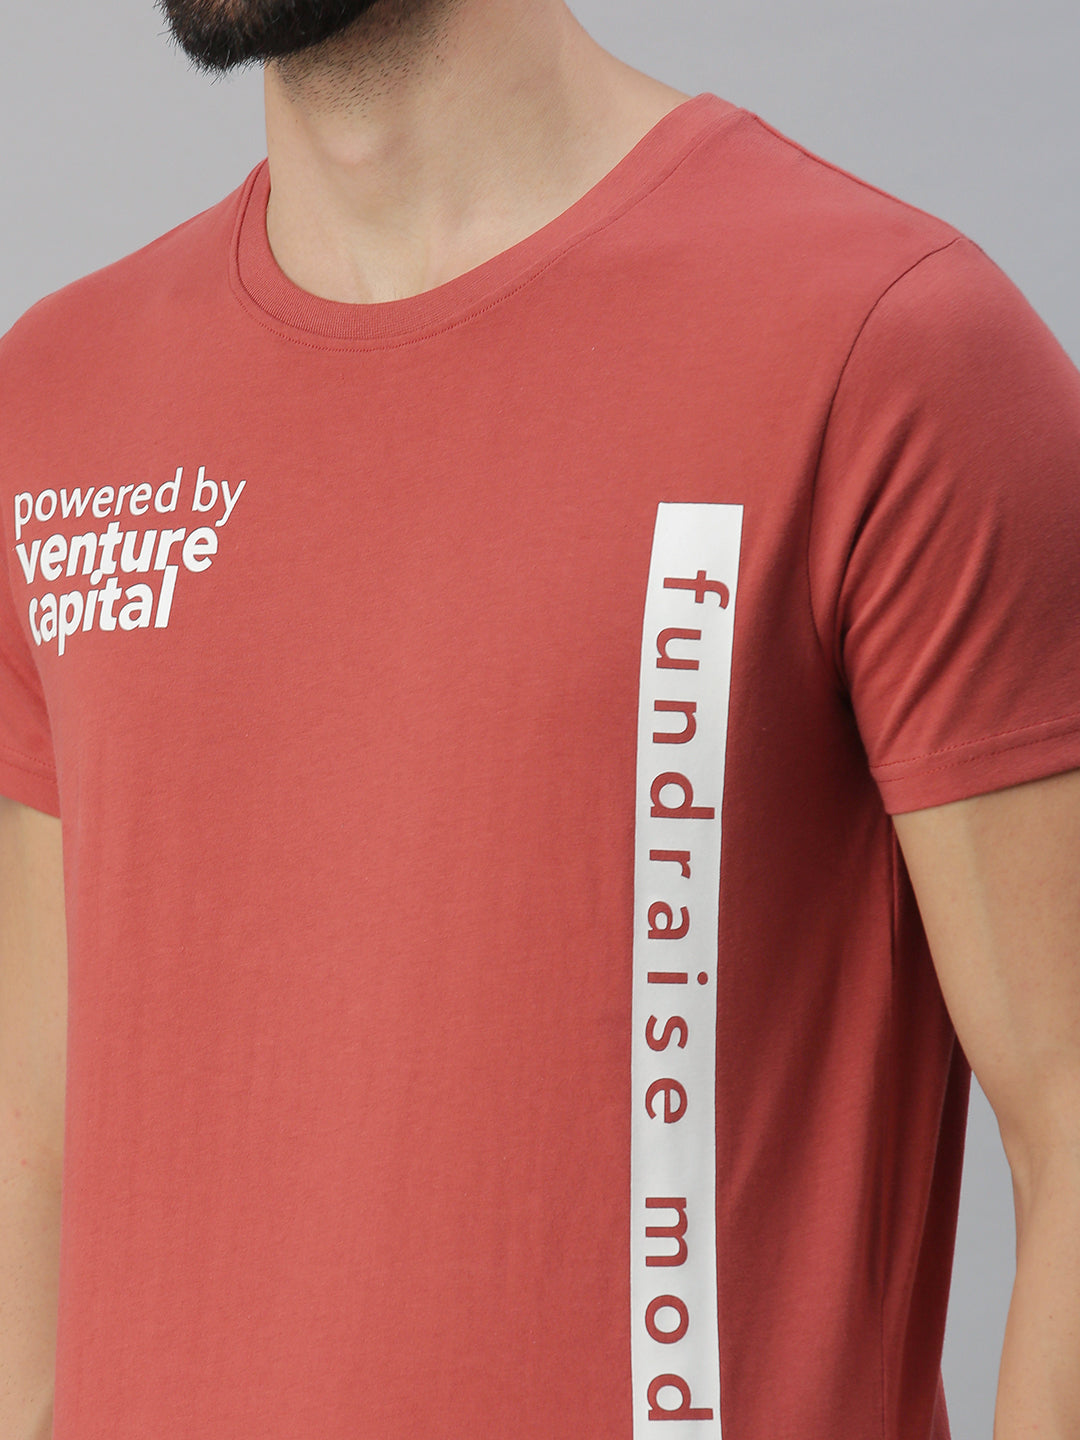 venture capitalist t-shirt